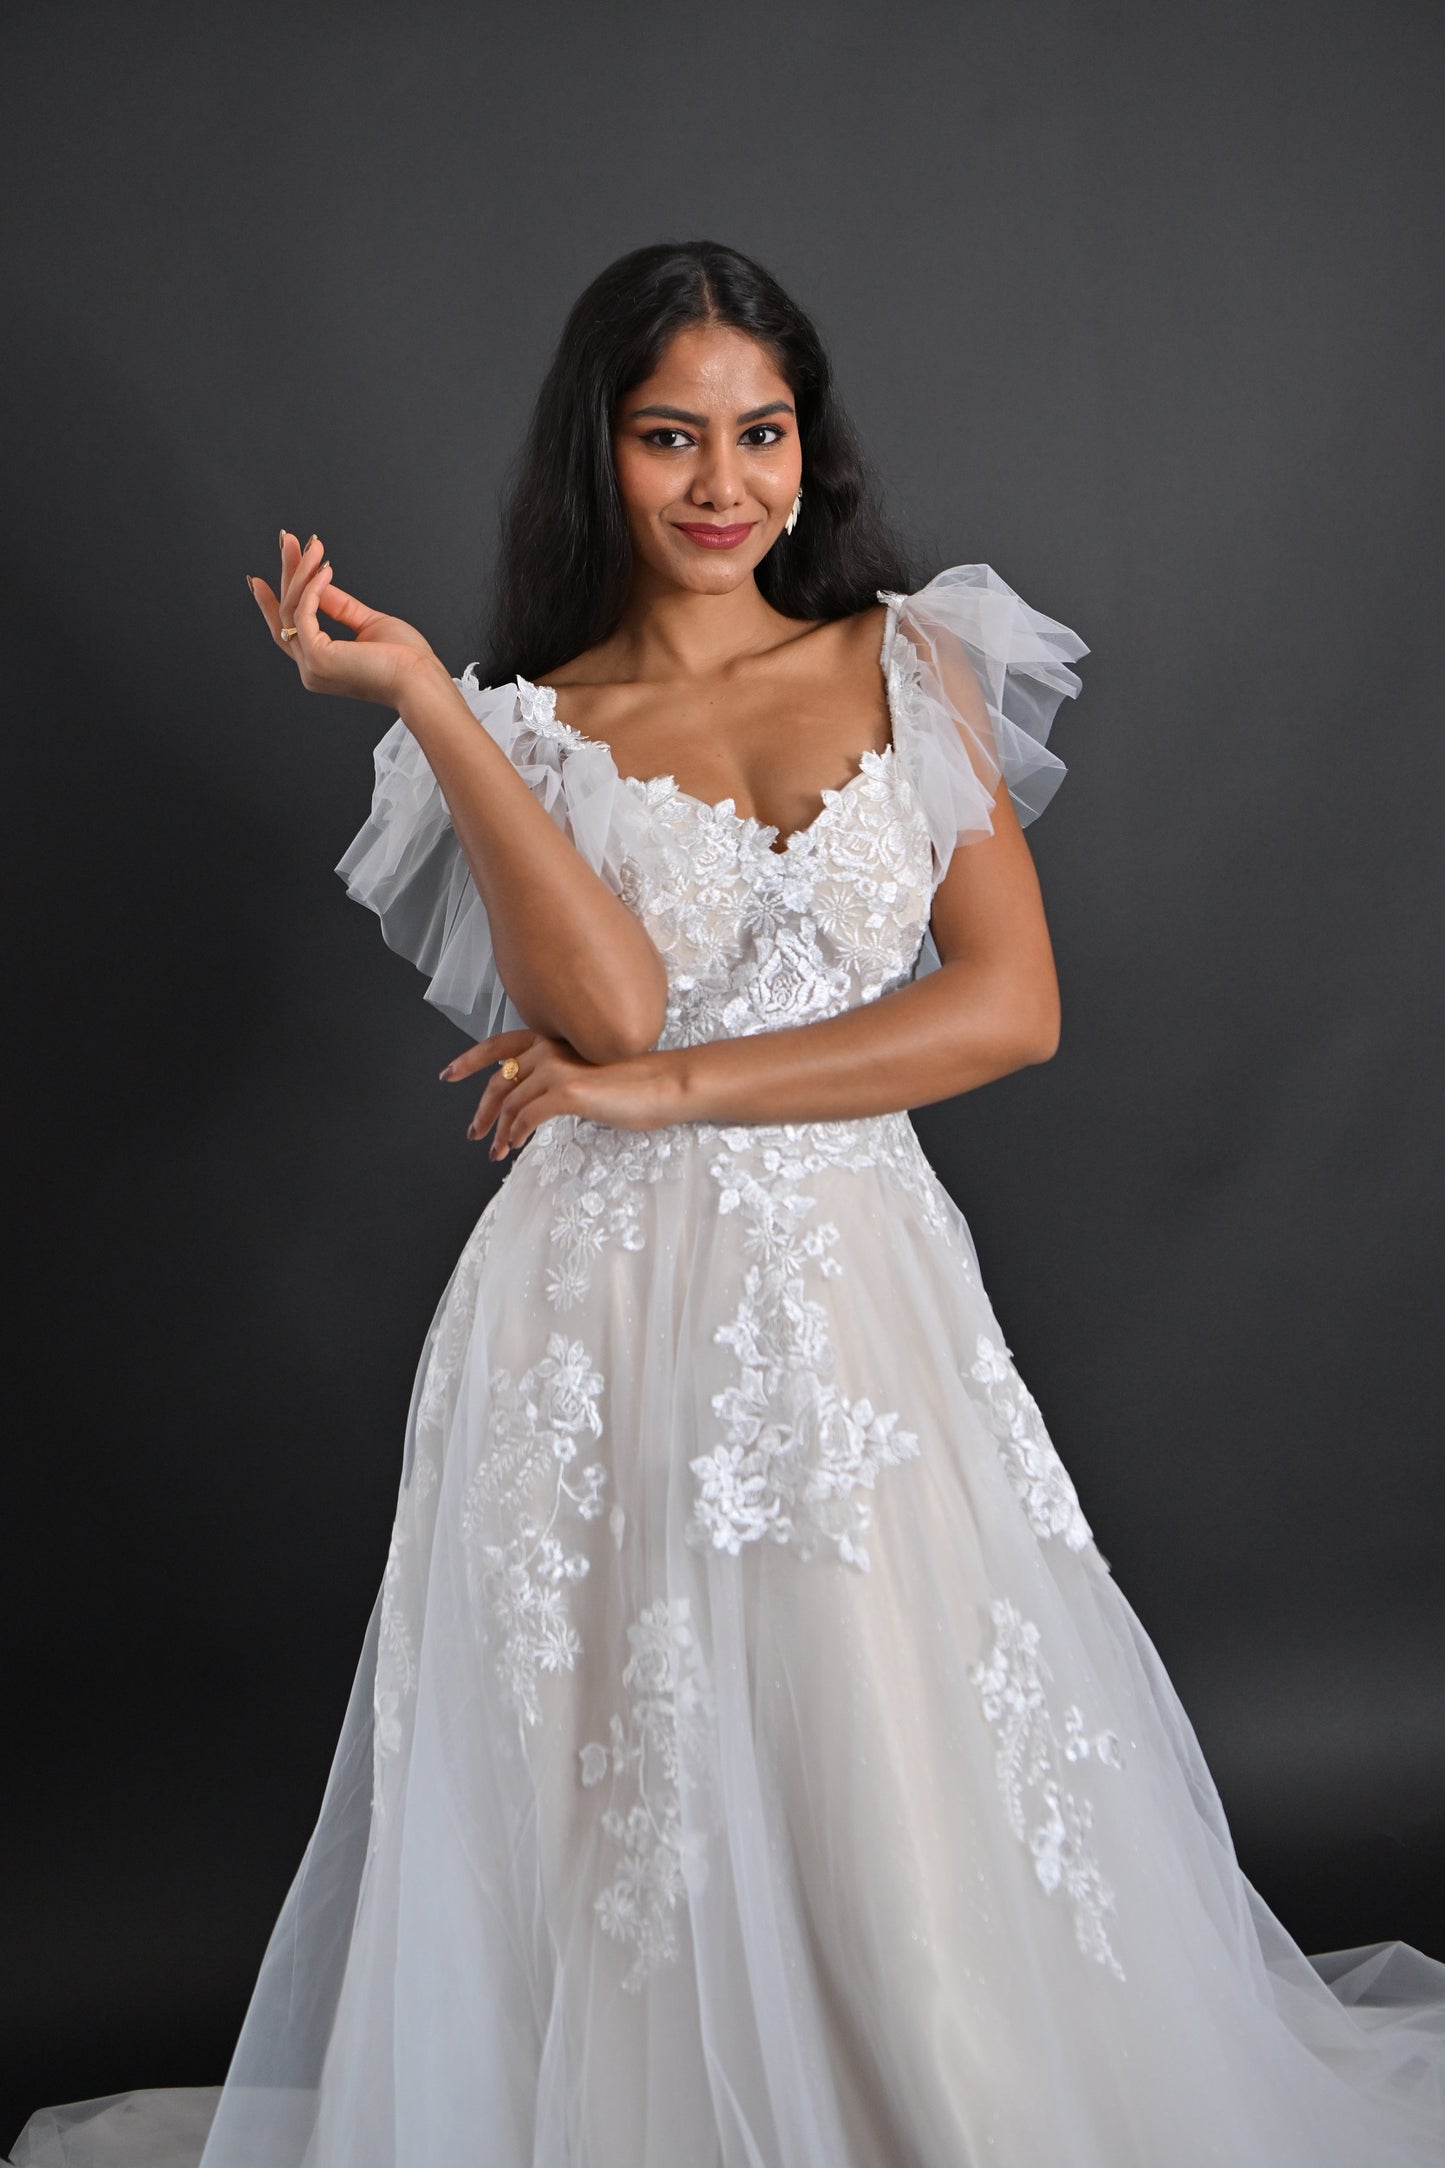 "Gardenia" White Wedding Dress With Lace Appliques